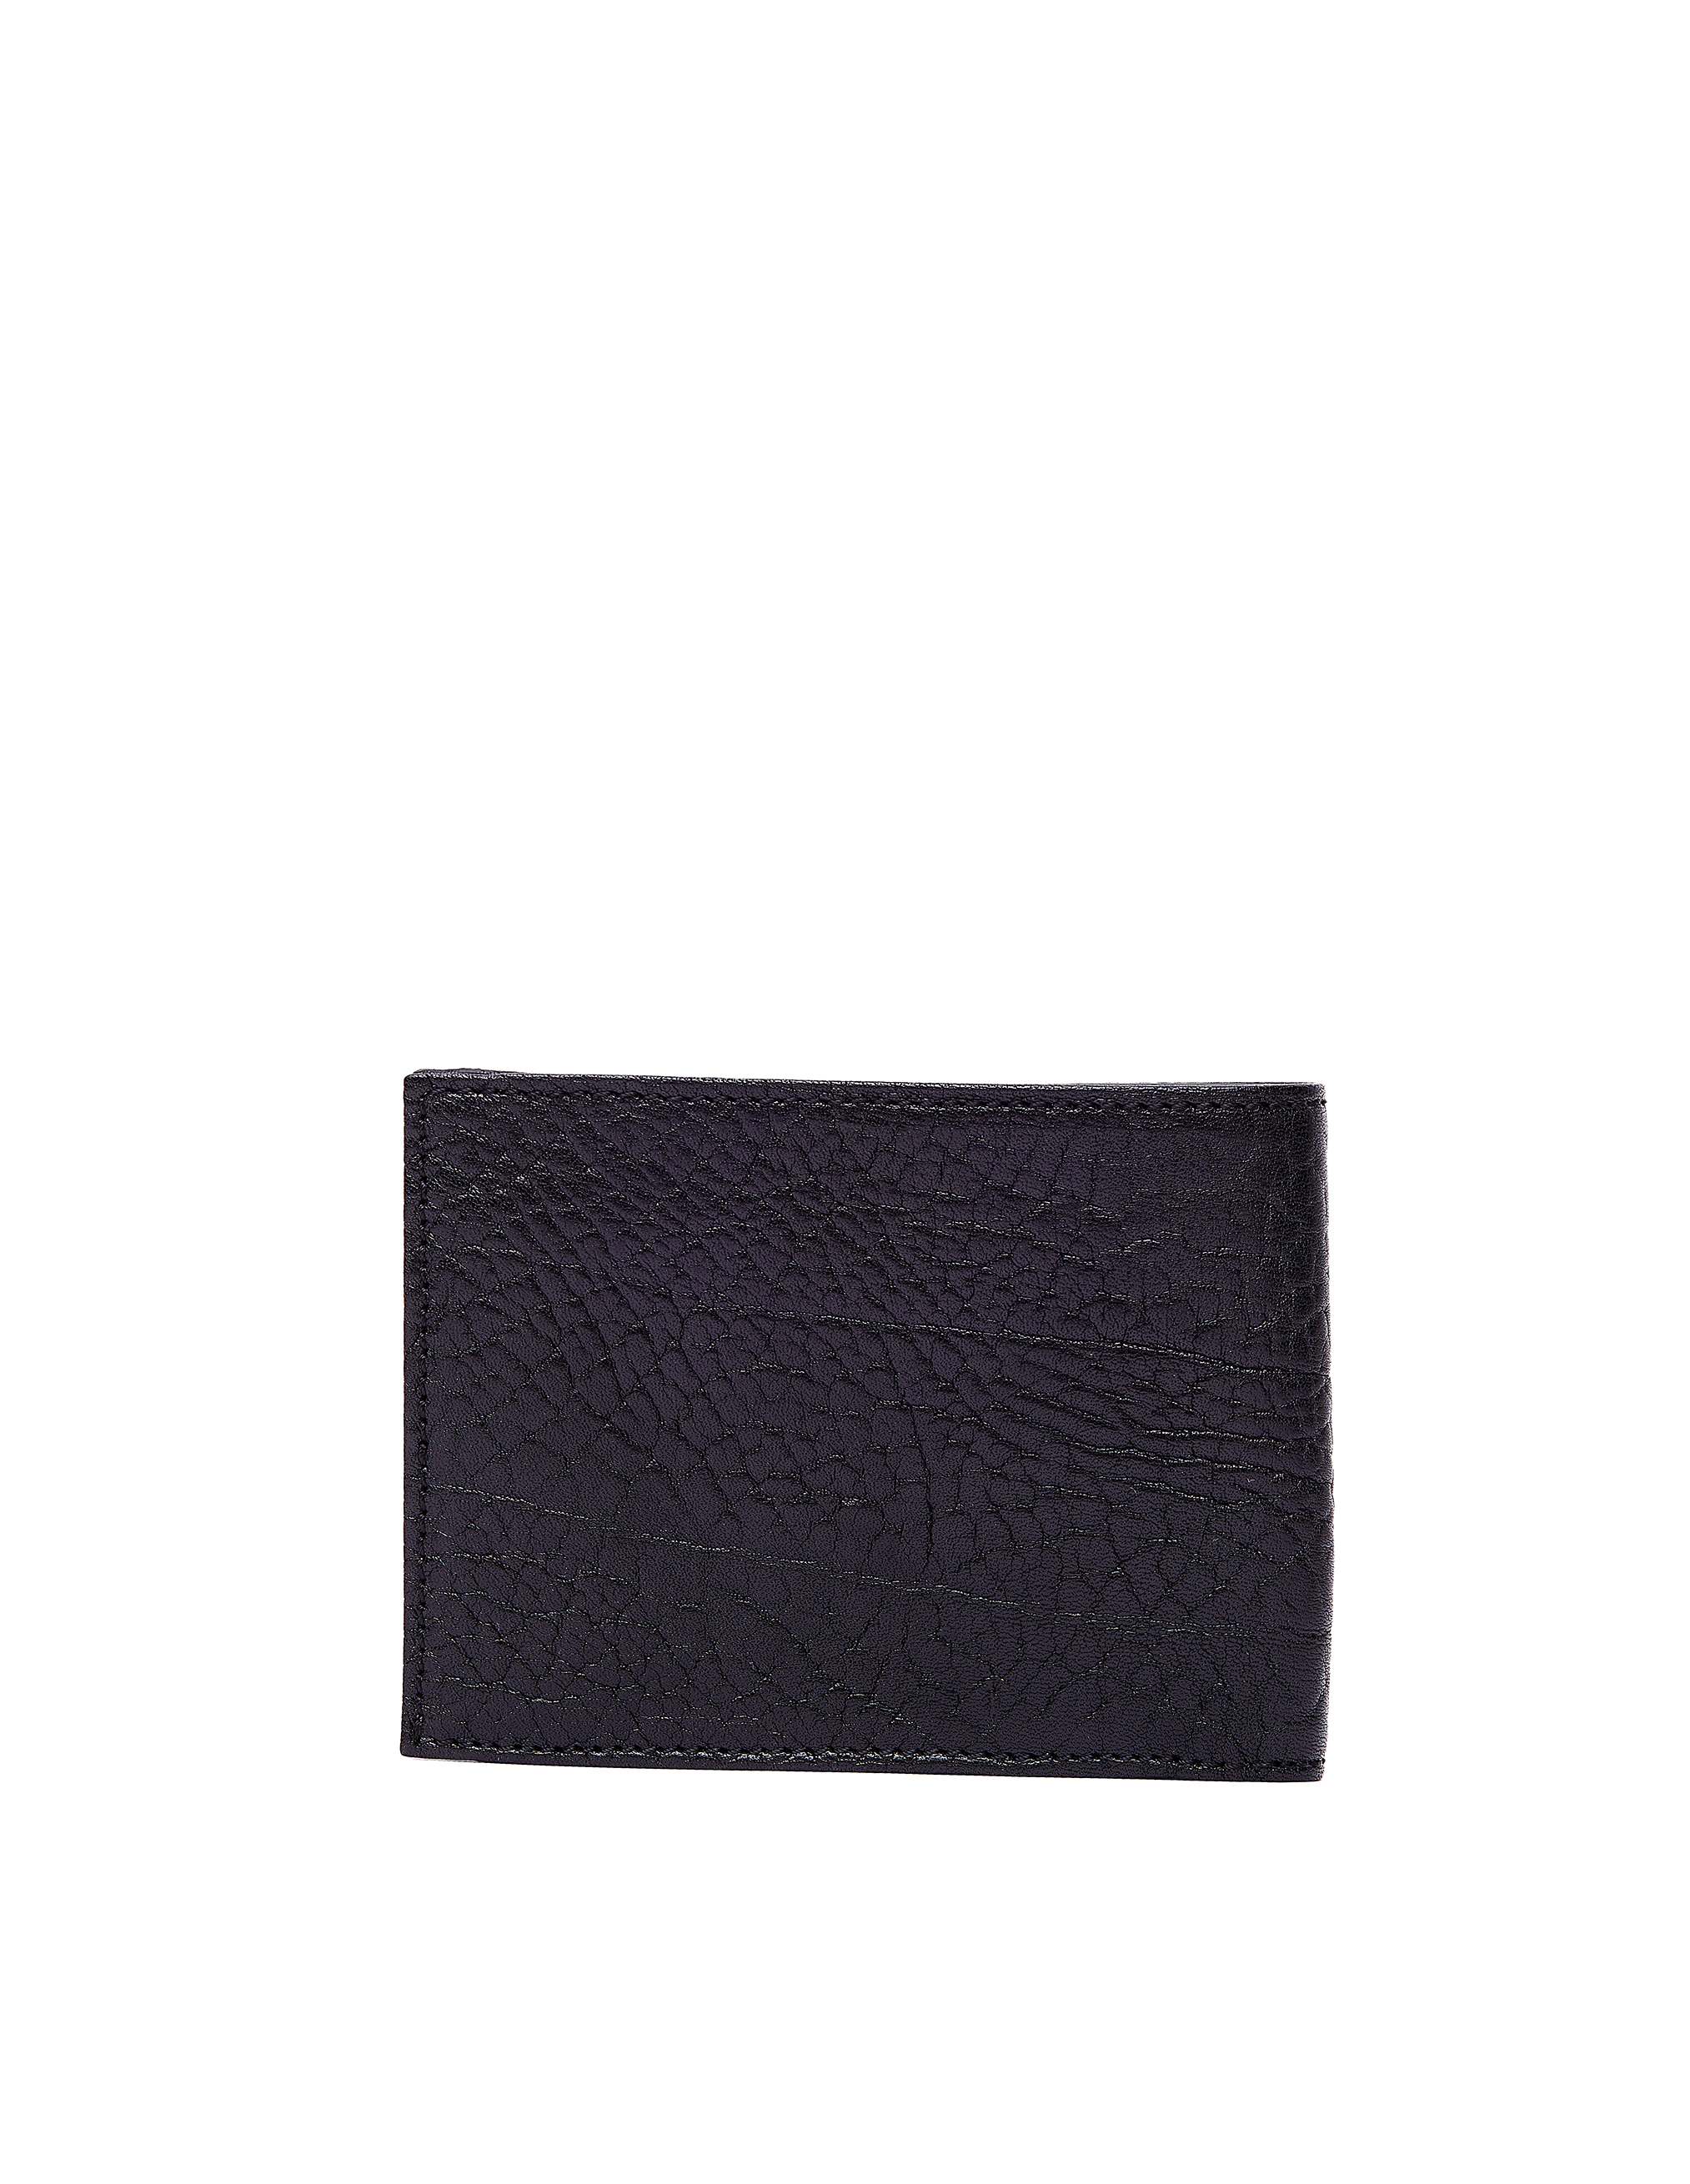 Черный кожаный кошелек Pocket Ugo Cacciatori WL141/VRN, размер One Size WL141/VRN - фото 3